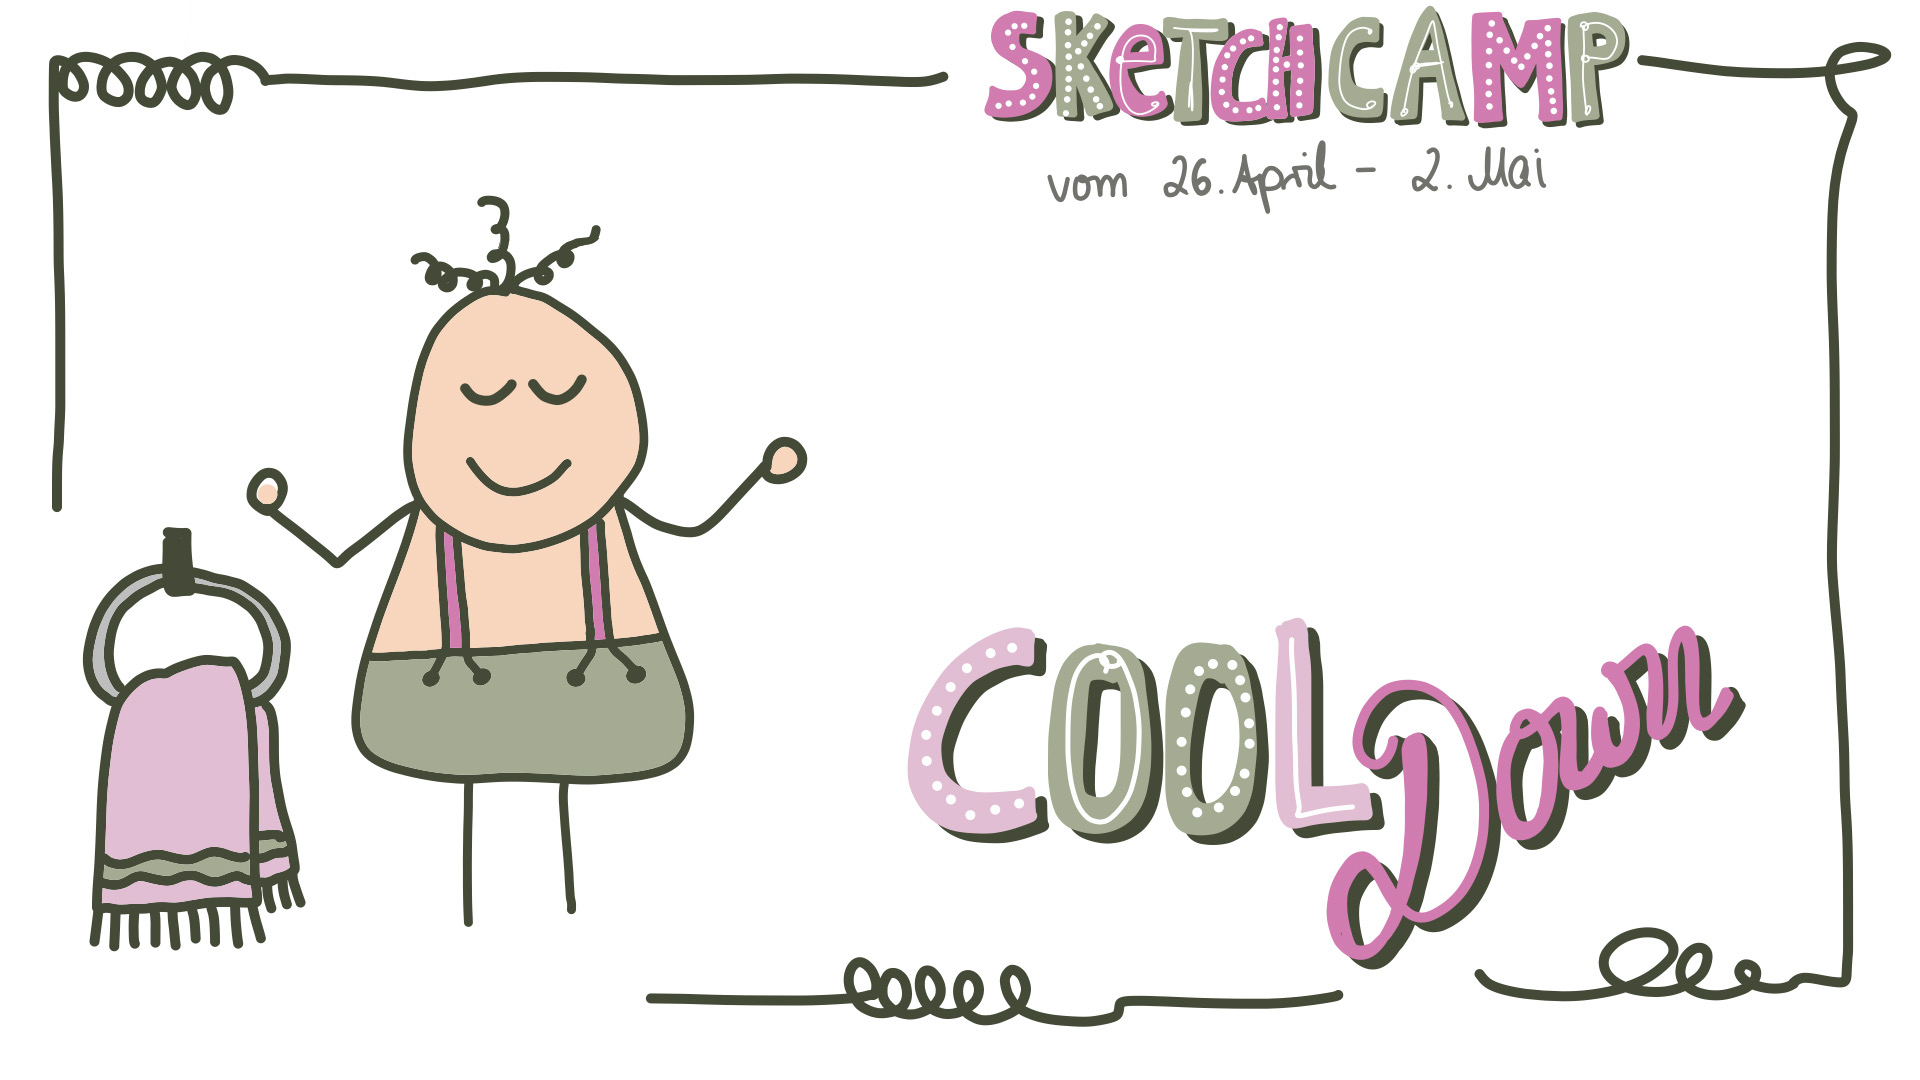 Cooldown - Sketchcamp